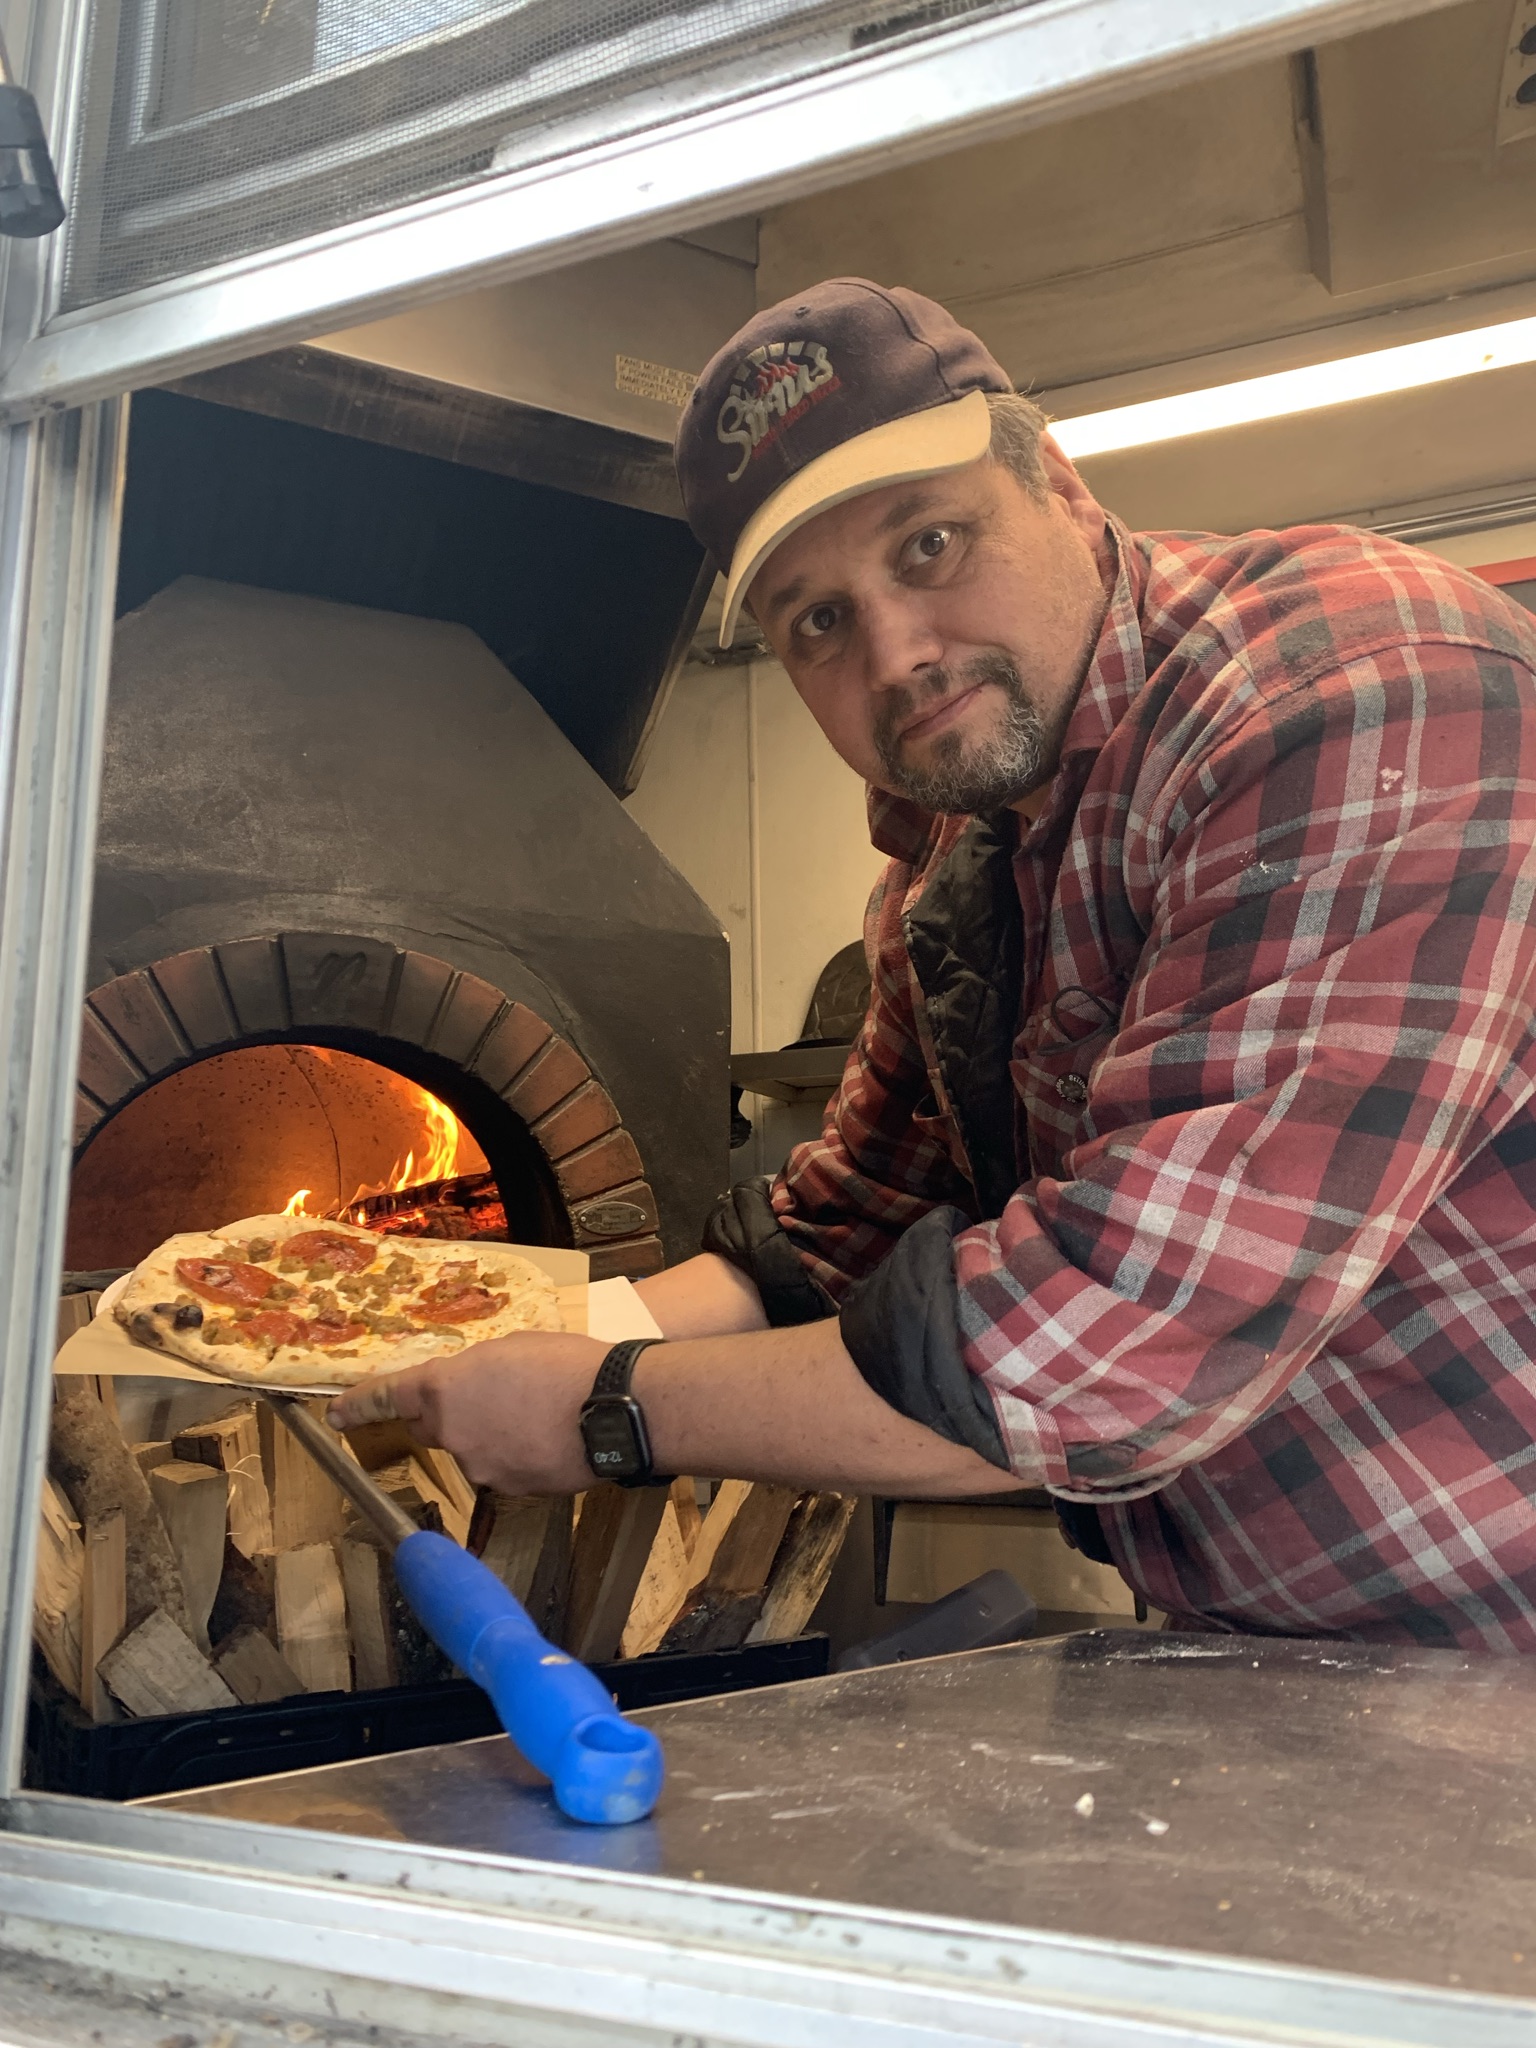 Sirius Wood Fired Pizza at Graham Auto Repair